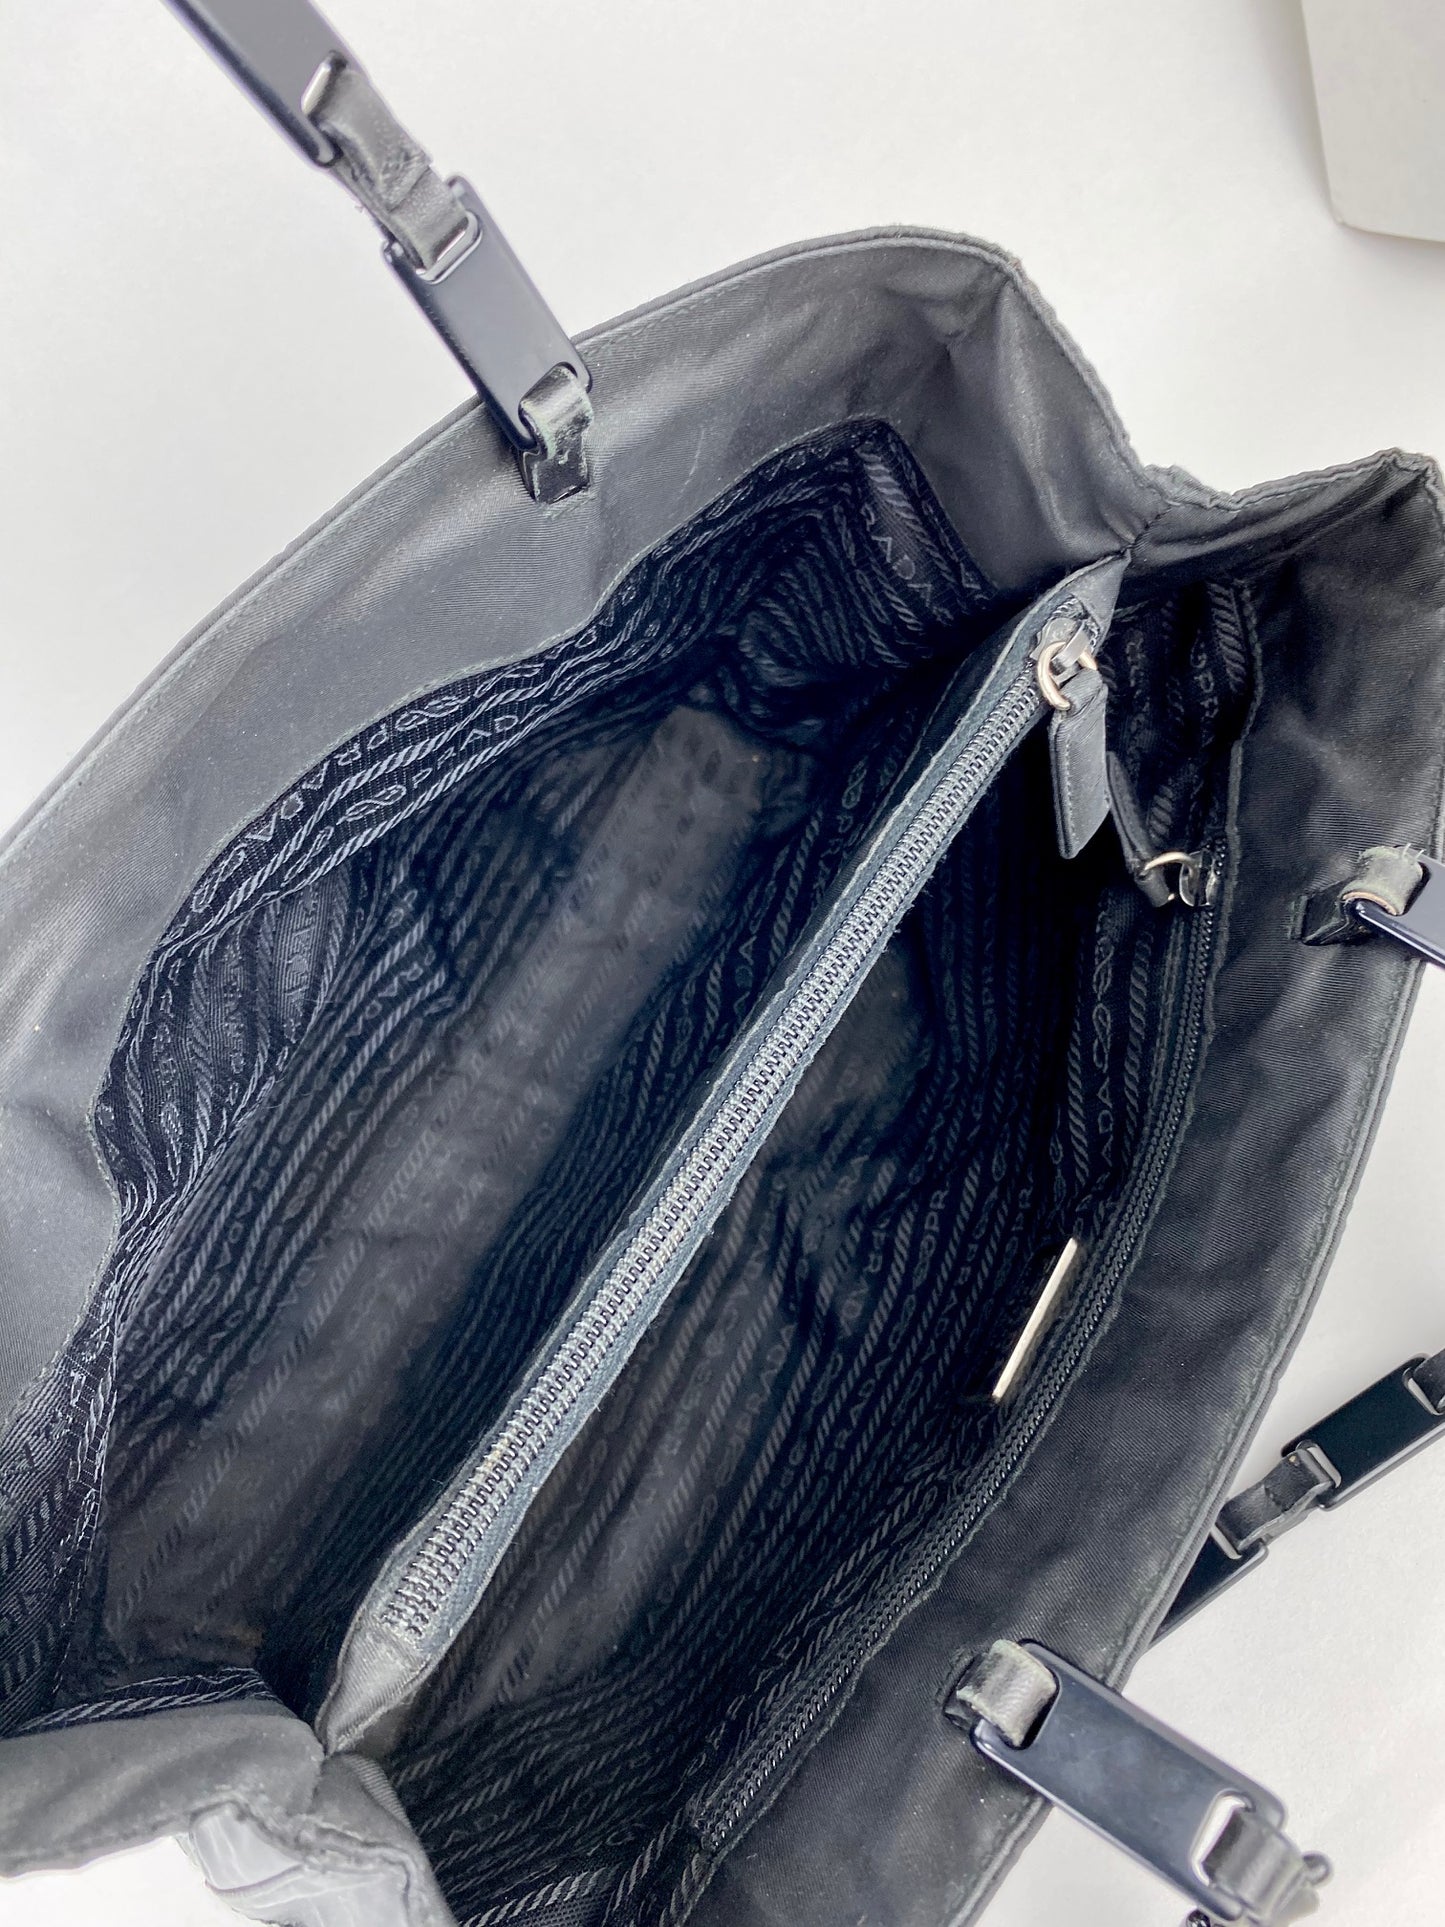 Prada Pre-owned Leather Tote Bag